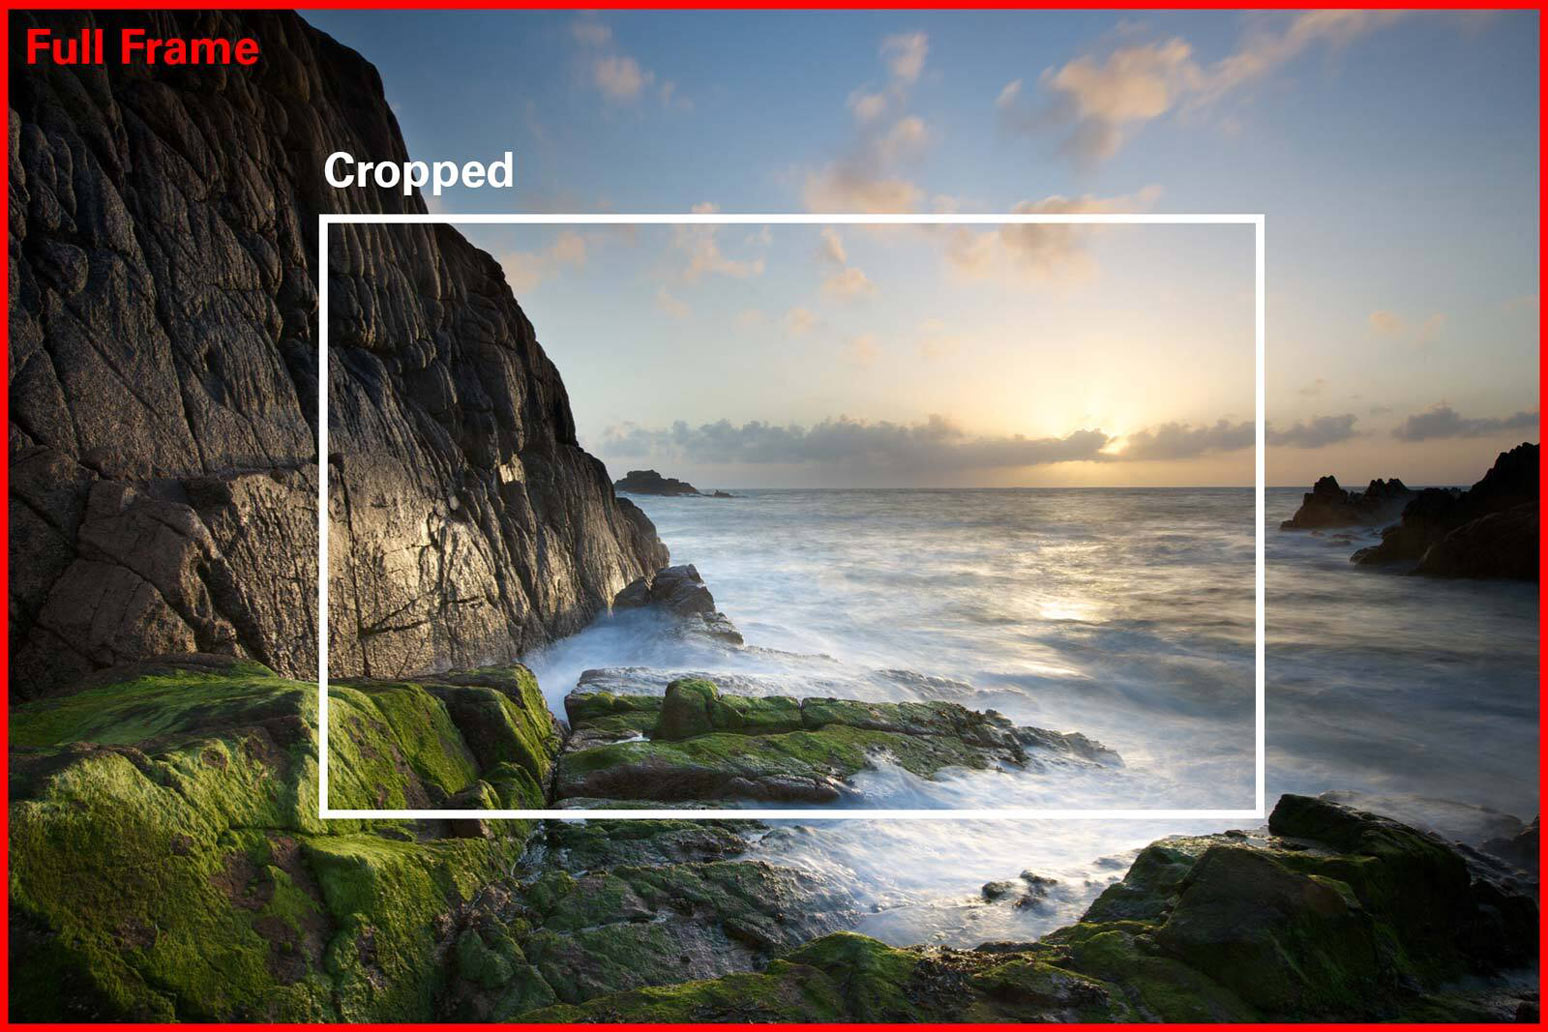 Full frame compared to crop sensor image